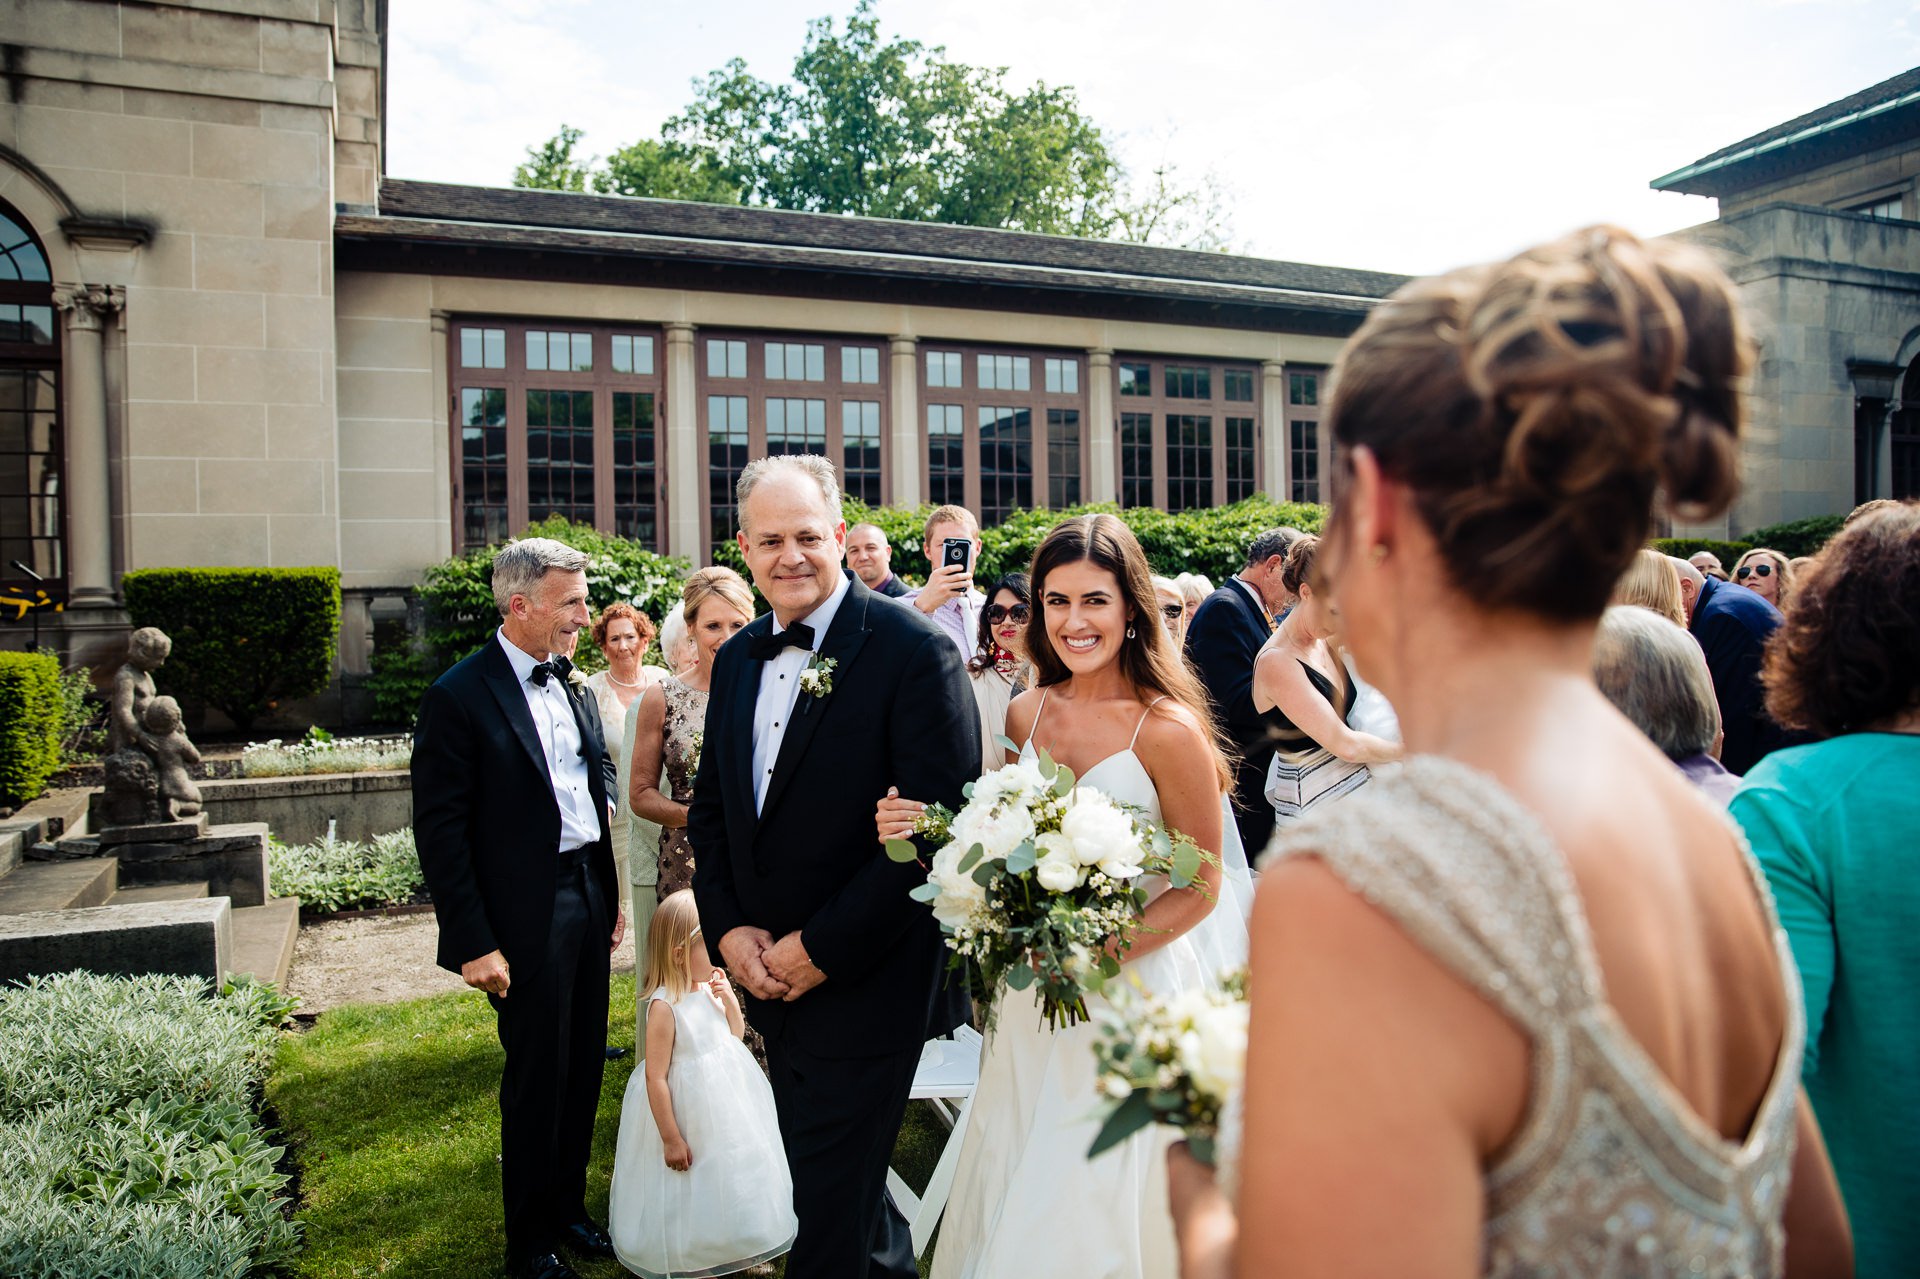 Cleveland Histroy Center Wedding Photographer at WRHS 36.jpg